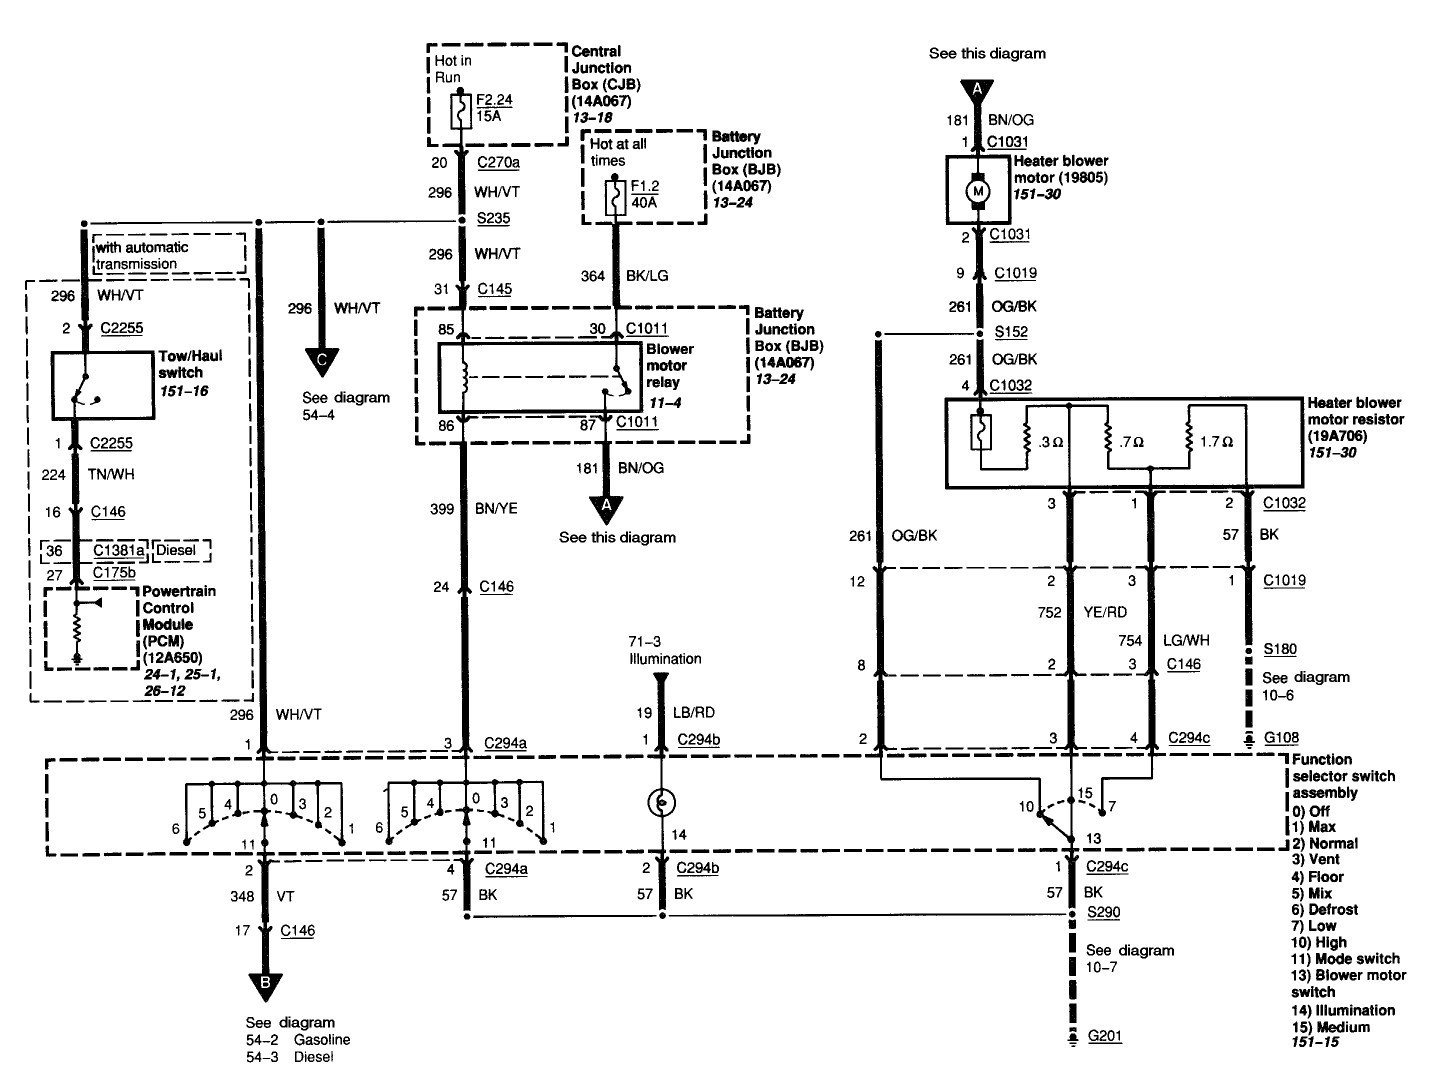 sje rhombus wiring diagram wiring auto wiring diagrams instructions rh netbazar co Franklin Electric Wiring Diagram